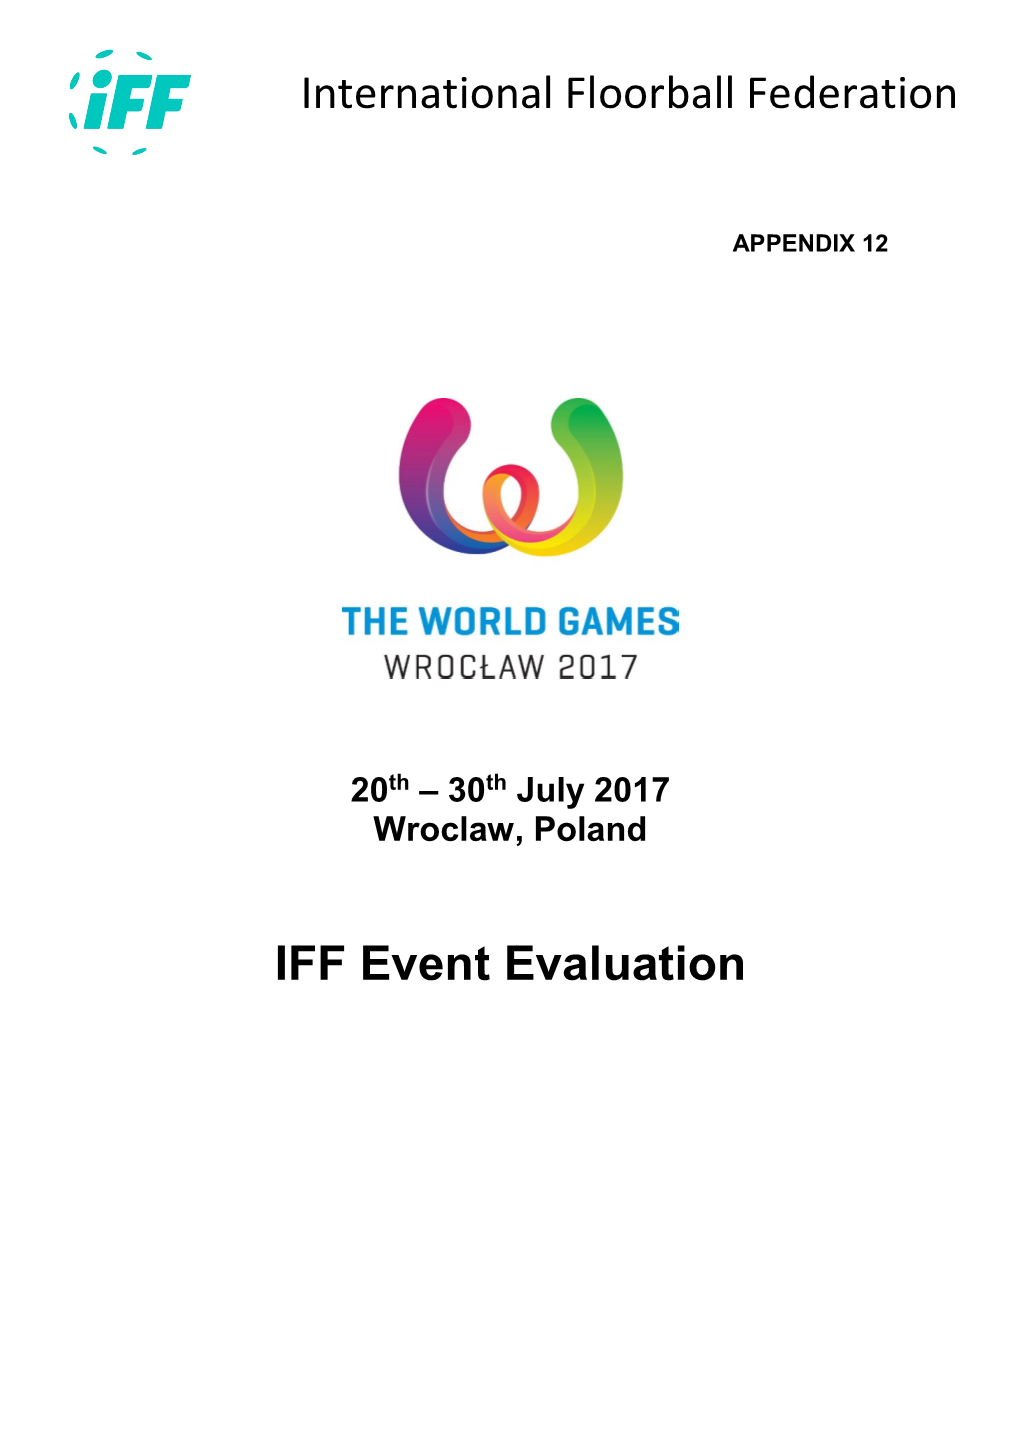 International Floorball Federation IFF Event Evaluation